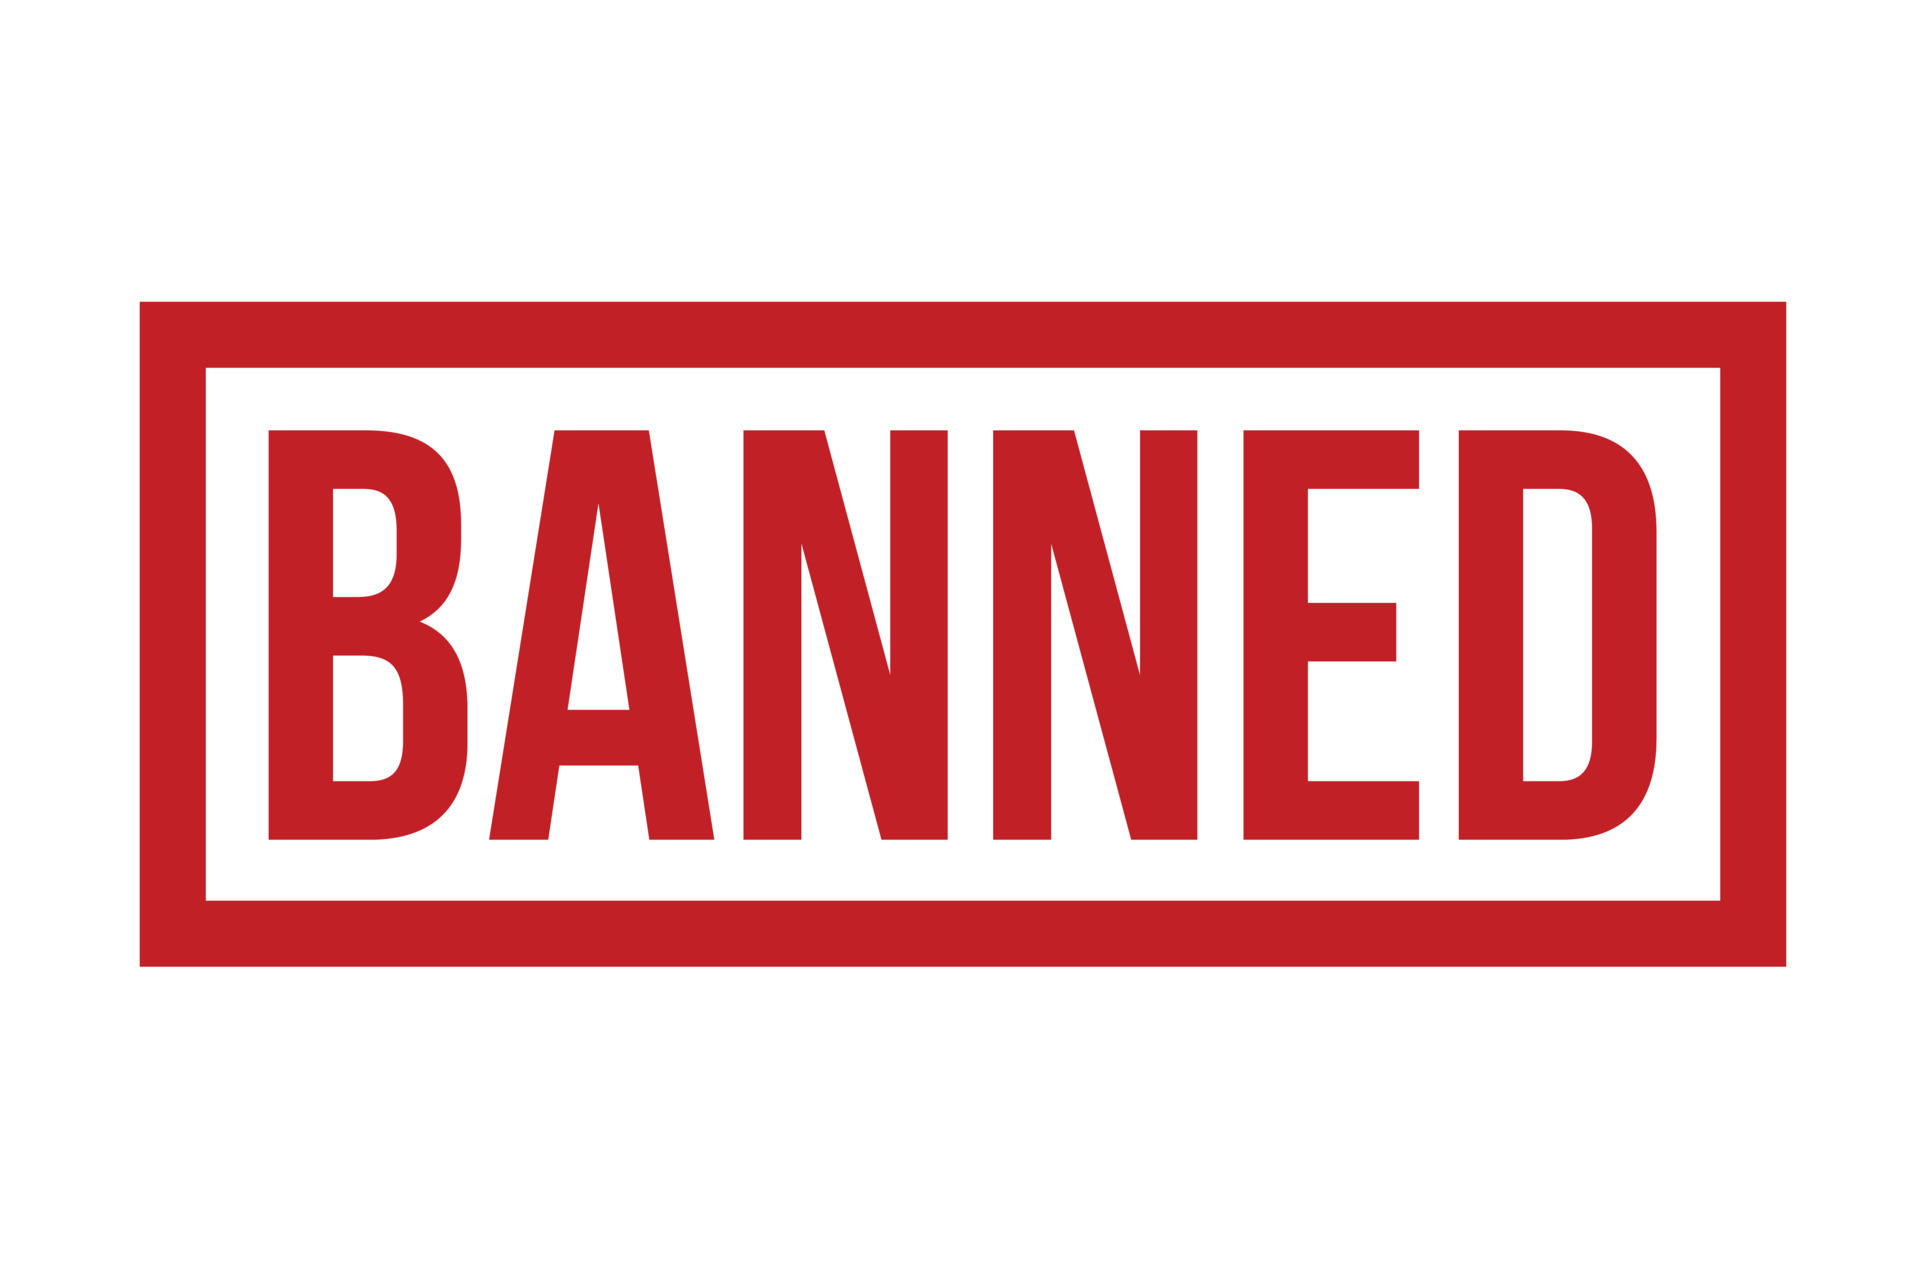 Ред бан. Штамп запрещено. Banned штамп. Резиновый оттиск-печать запрещено. Штамп запрещено цензурой.